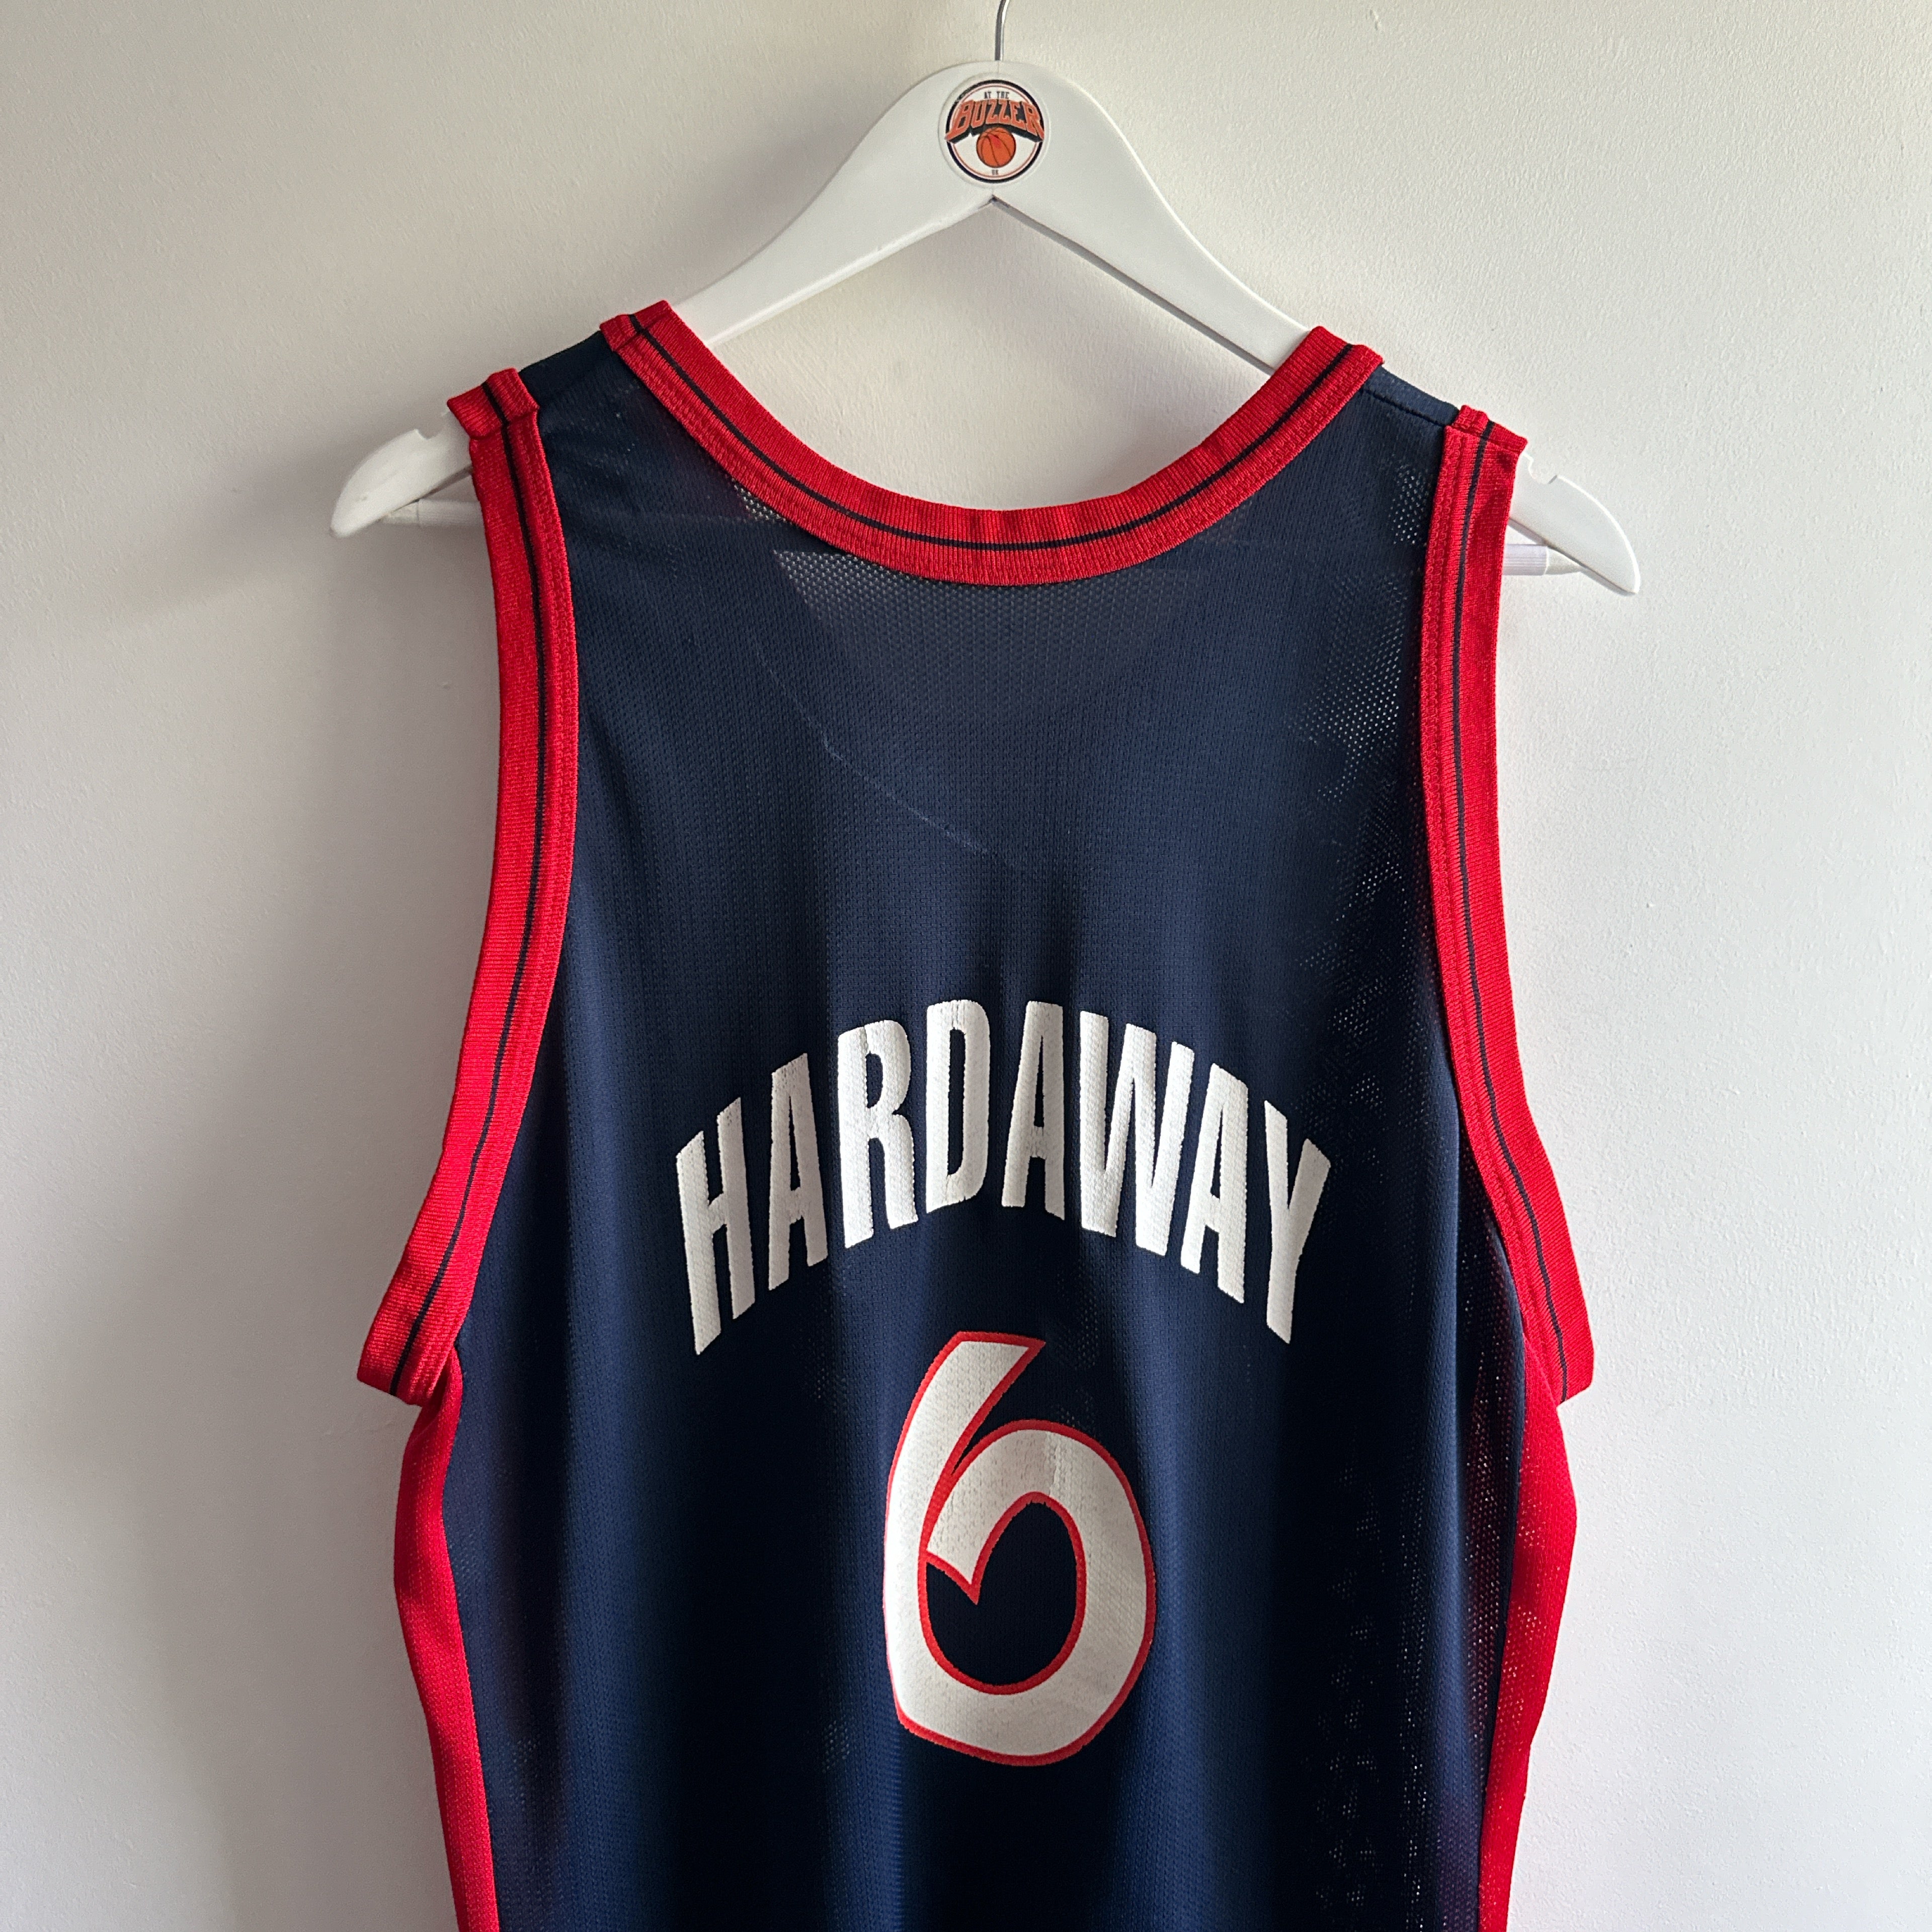 Team USA Penny Hardaway Champion jersey - Large